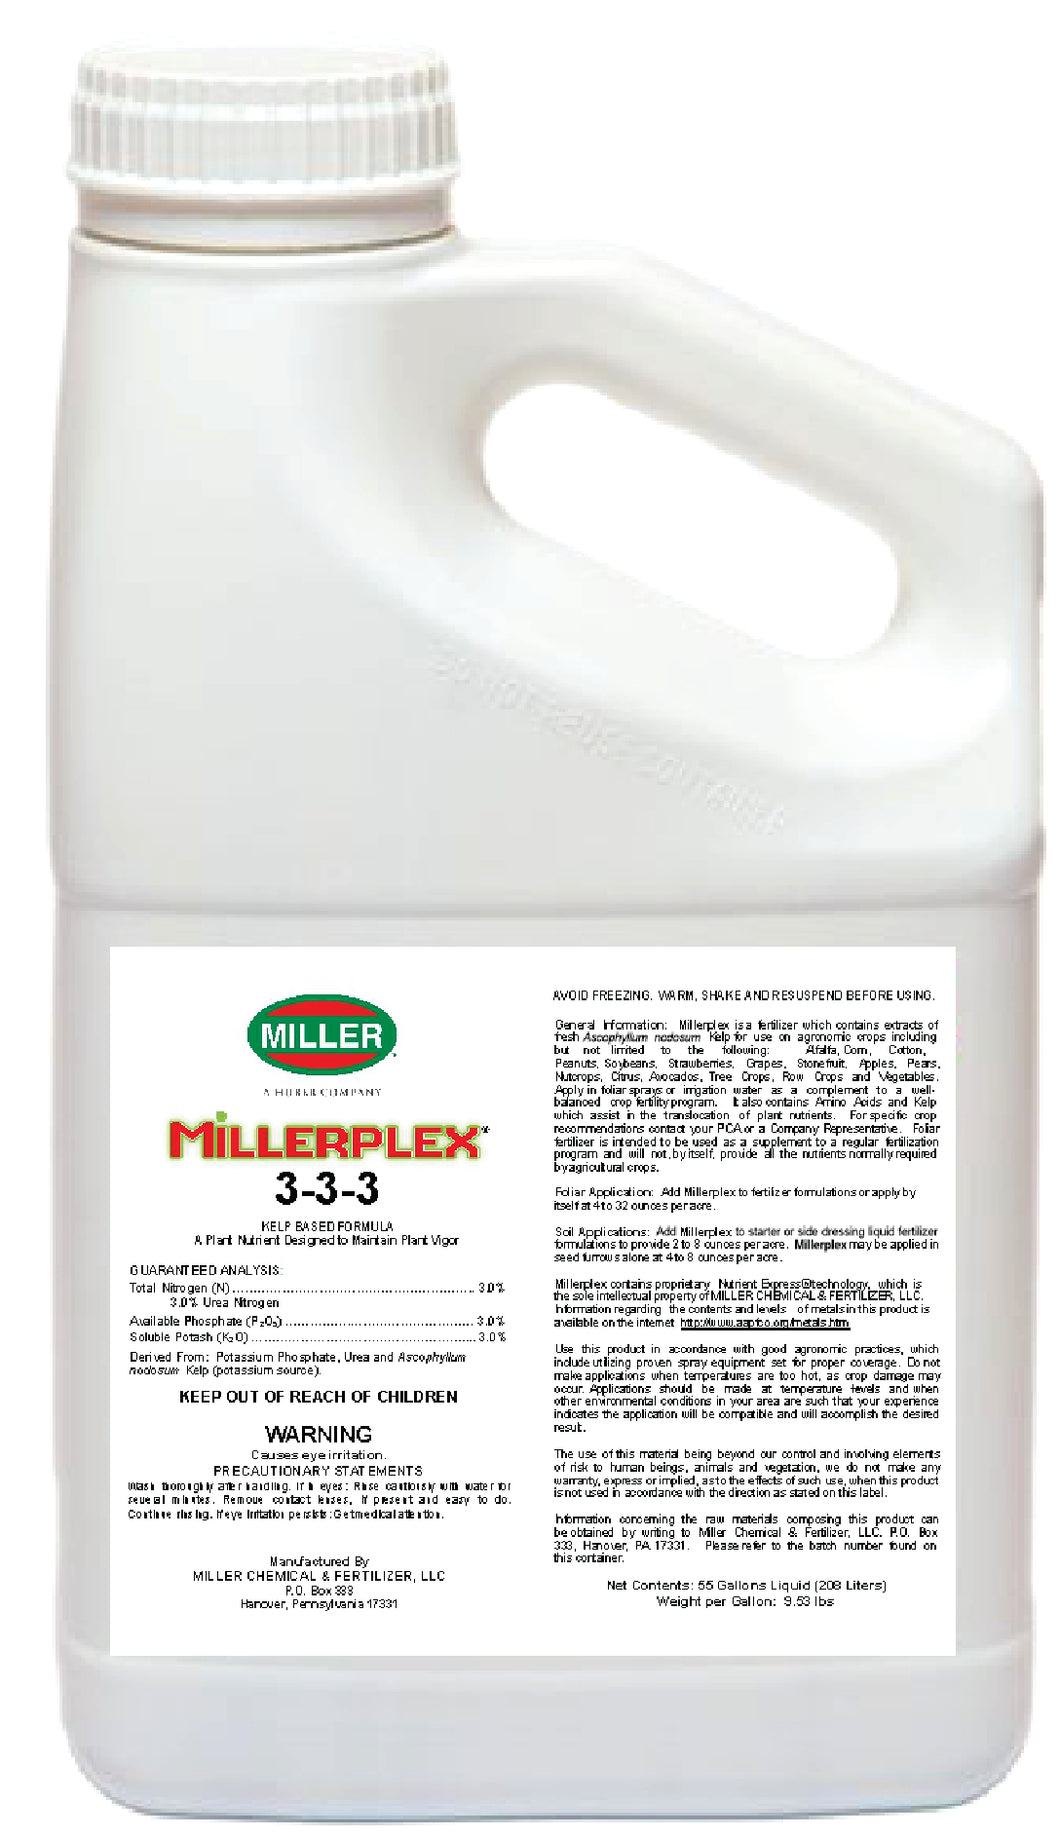 Millerplex 3-3-3, kelp-based balanced fertilizer